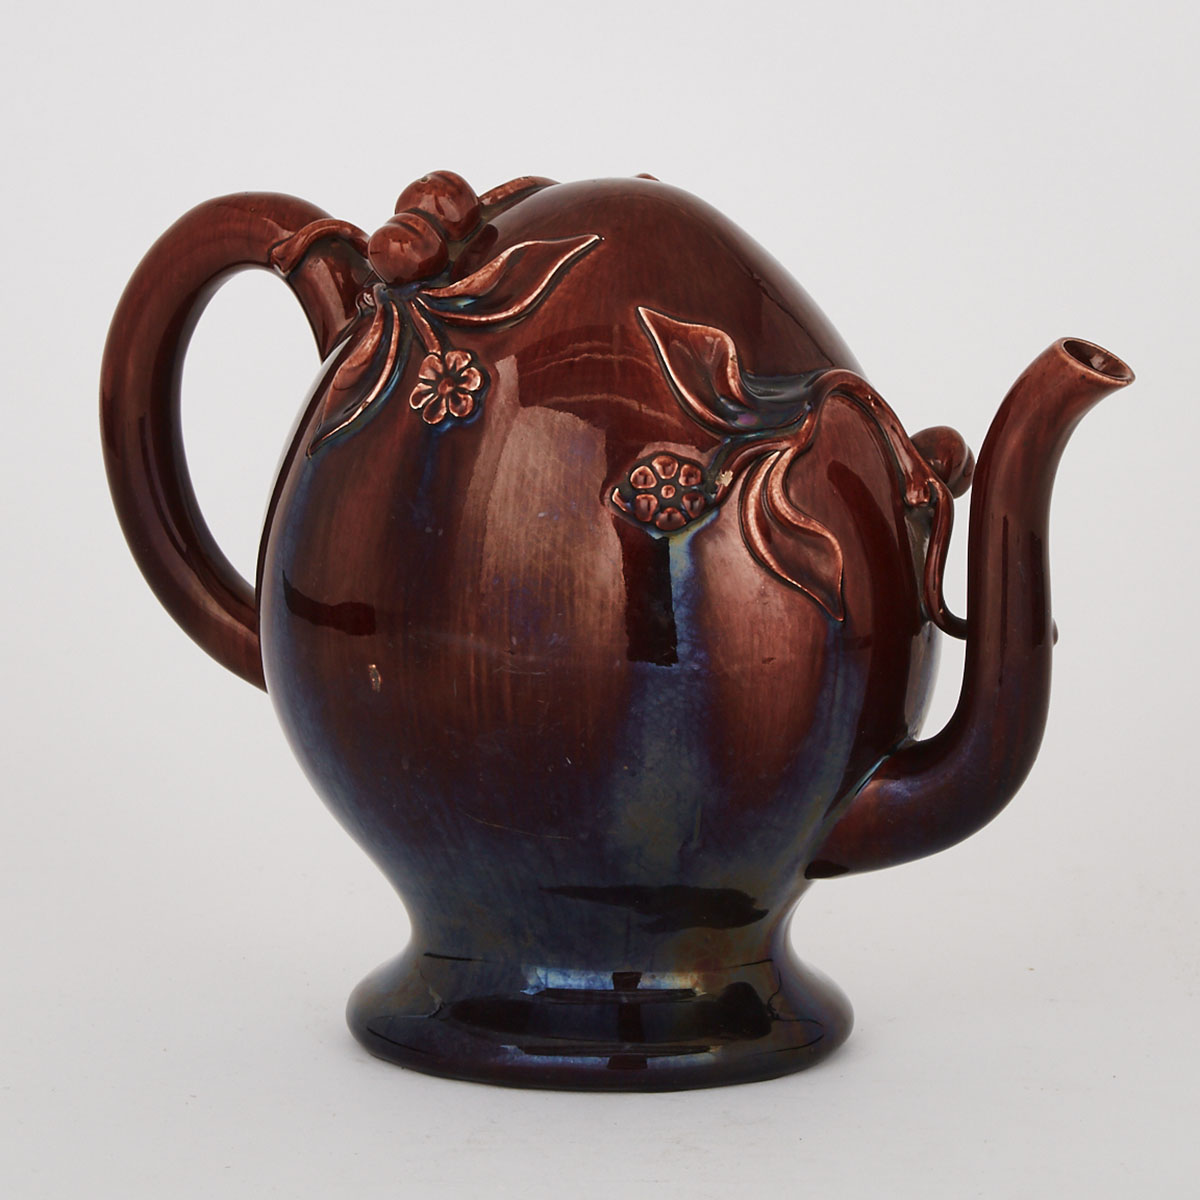 Mortlock’s Brown-Glazed Cadogan Teapot, 19th century